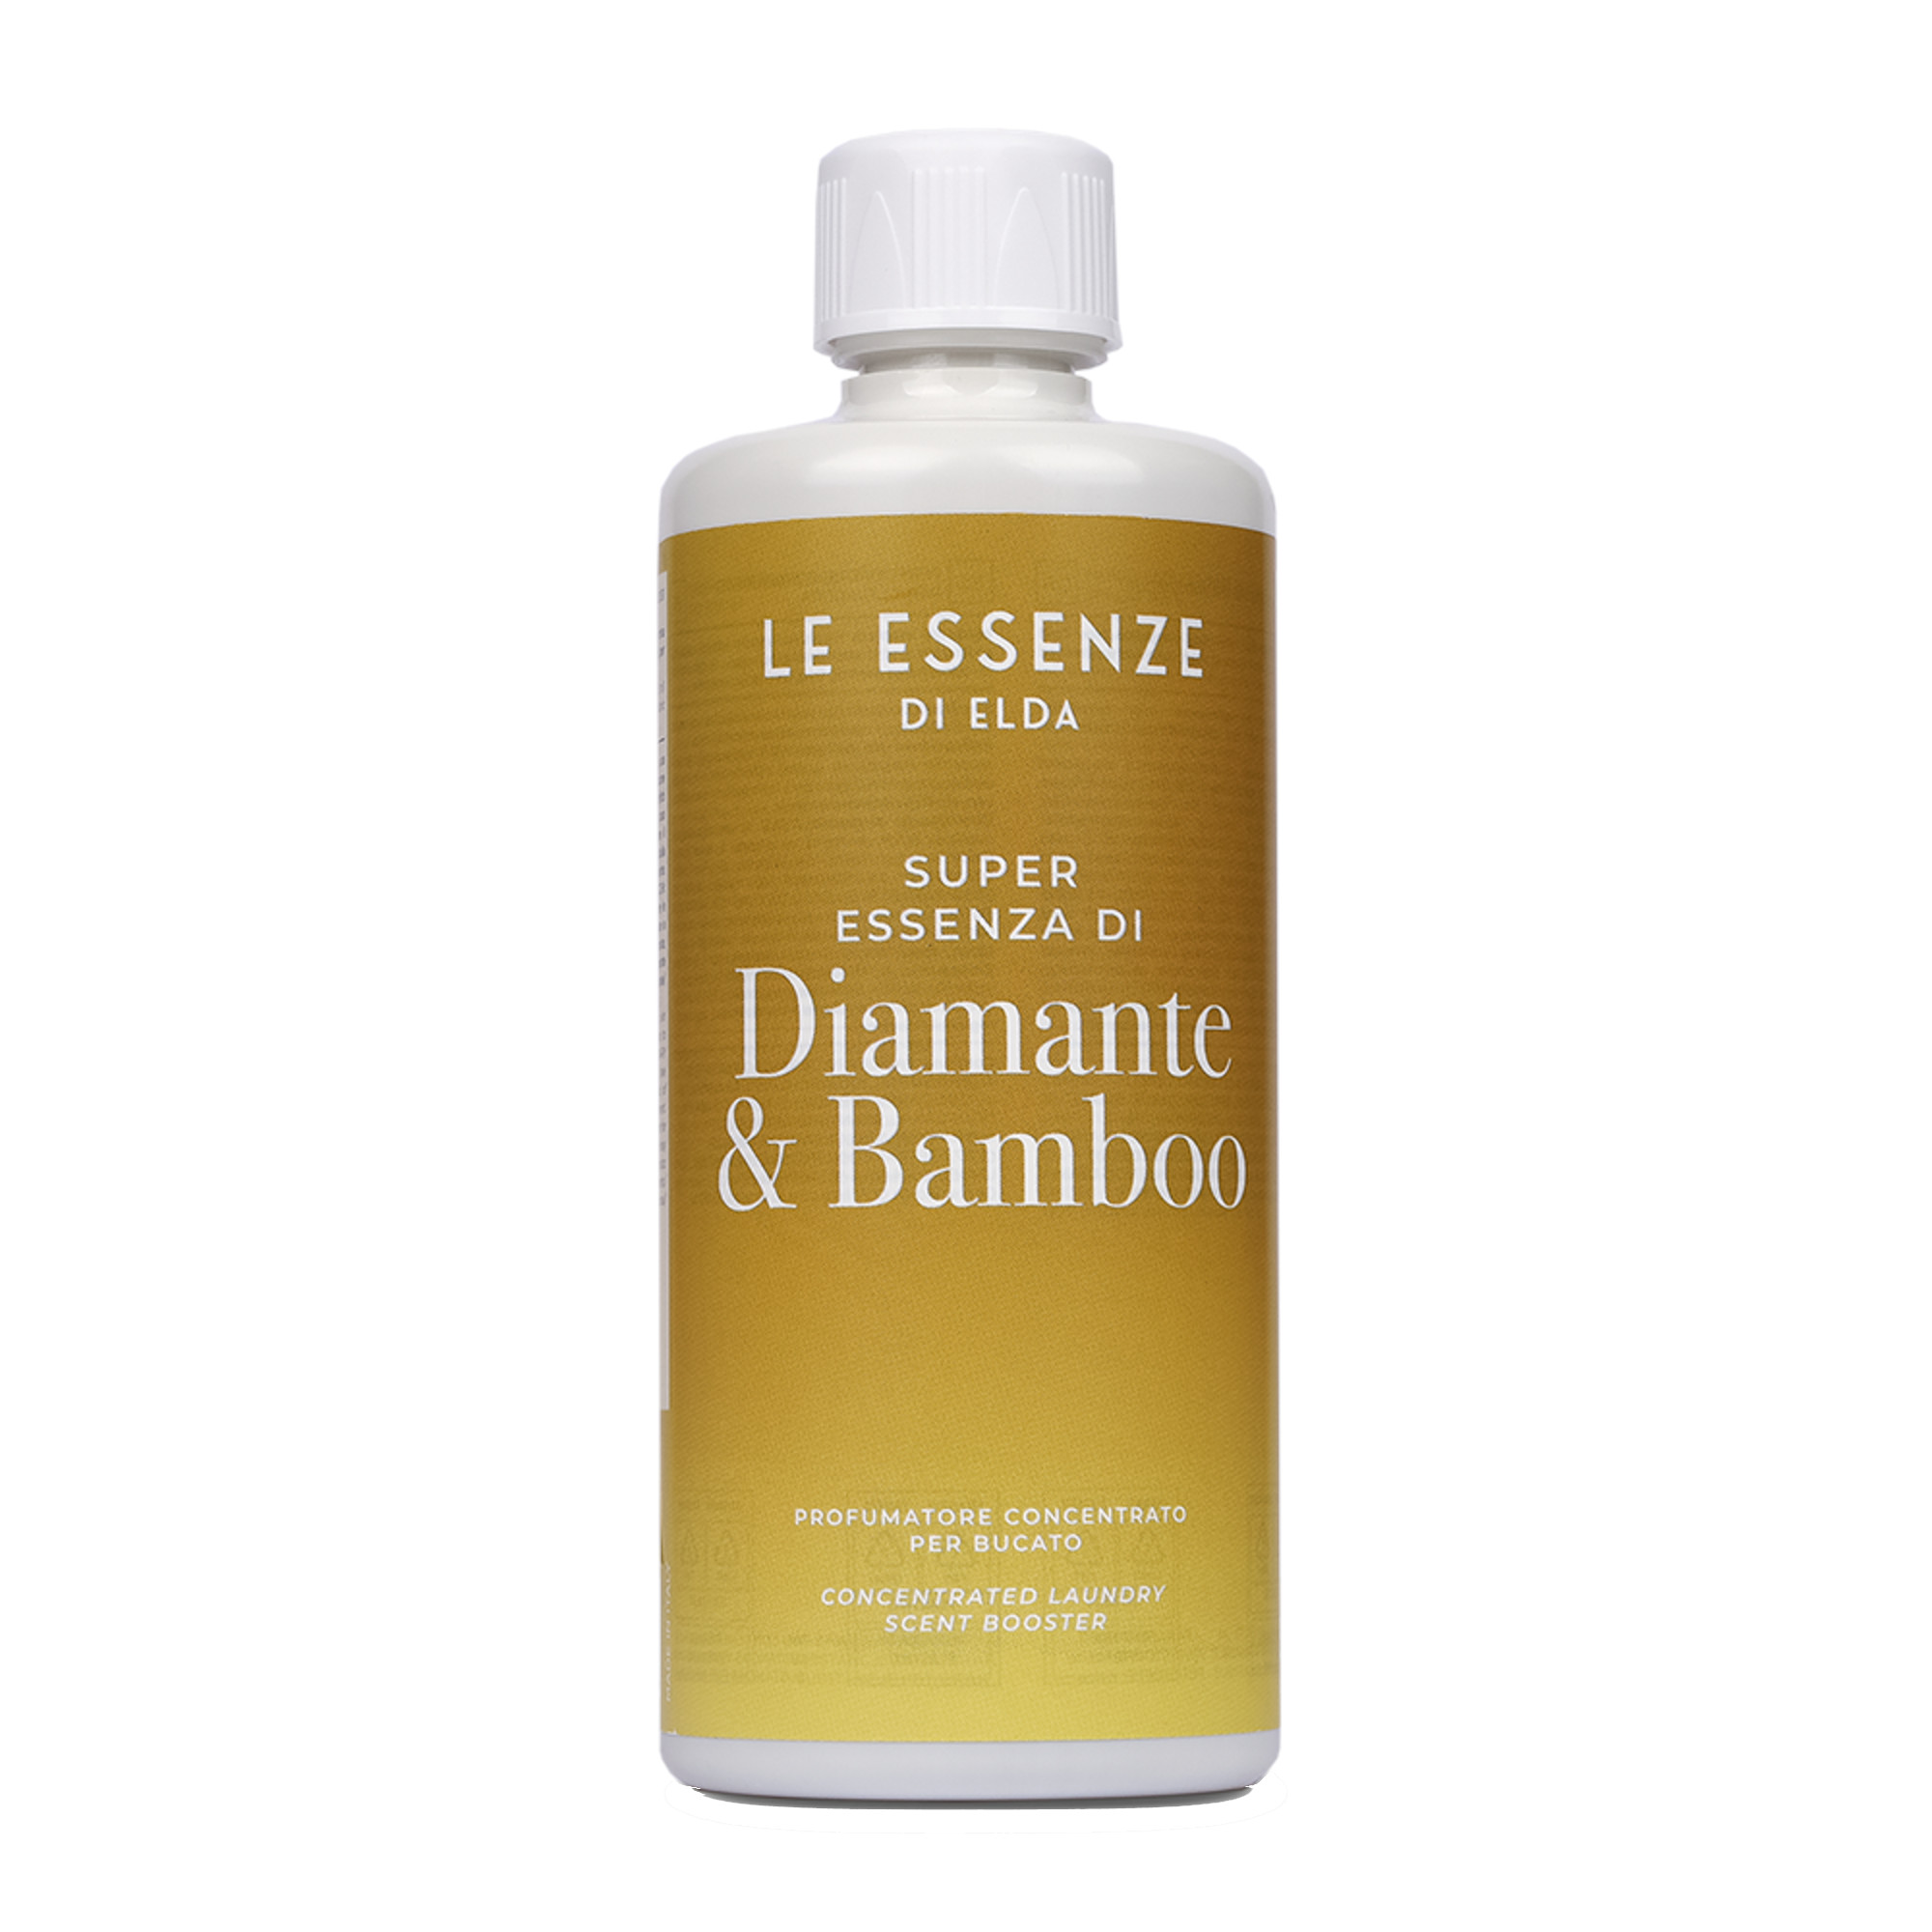 Wasparfum Diamante & Bamboo 500ml - Le Essenza di Elda